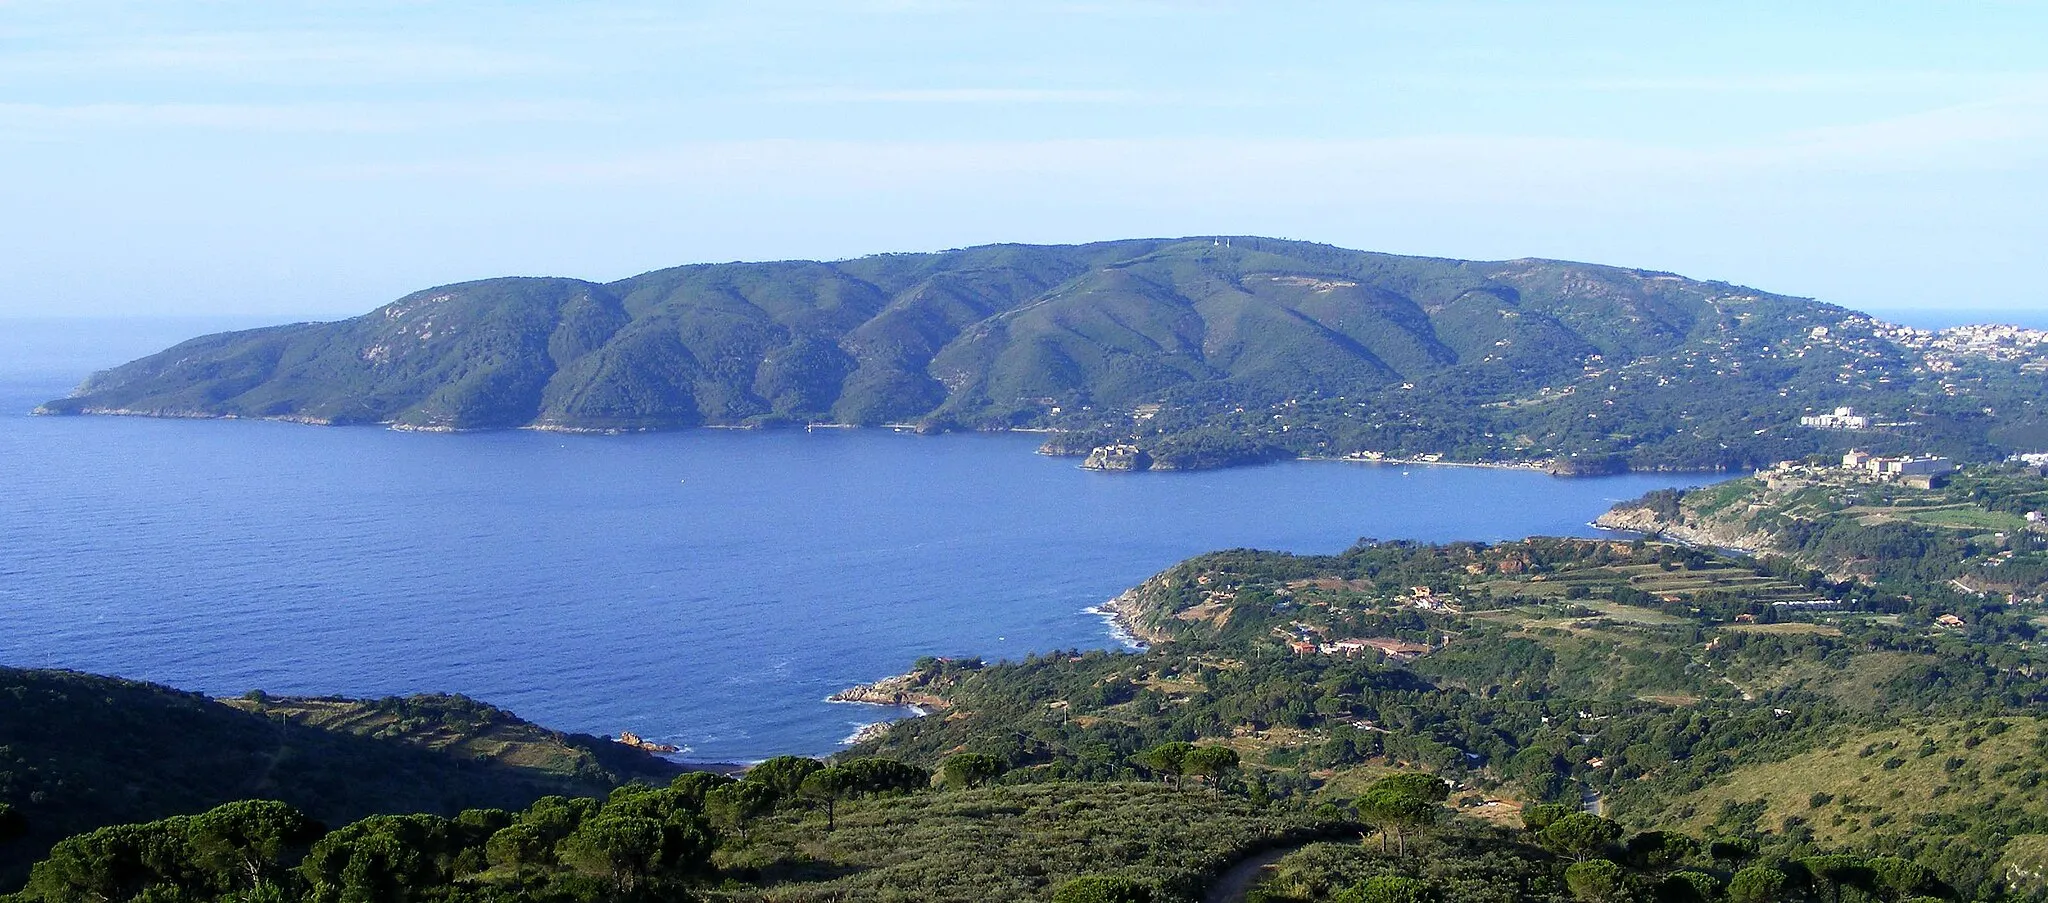 Photo showing: Calamita Mount (Elba Island, LI, Italy) as seen from Arco Mount.
Arcipelago Toscano National Park.